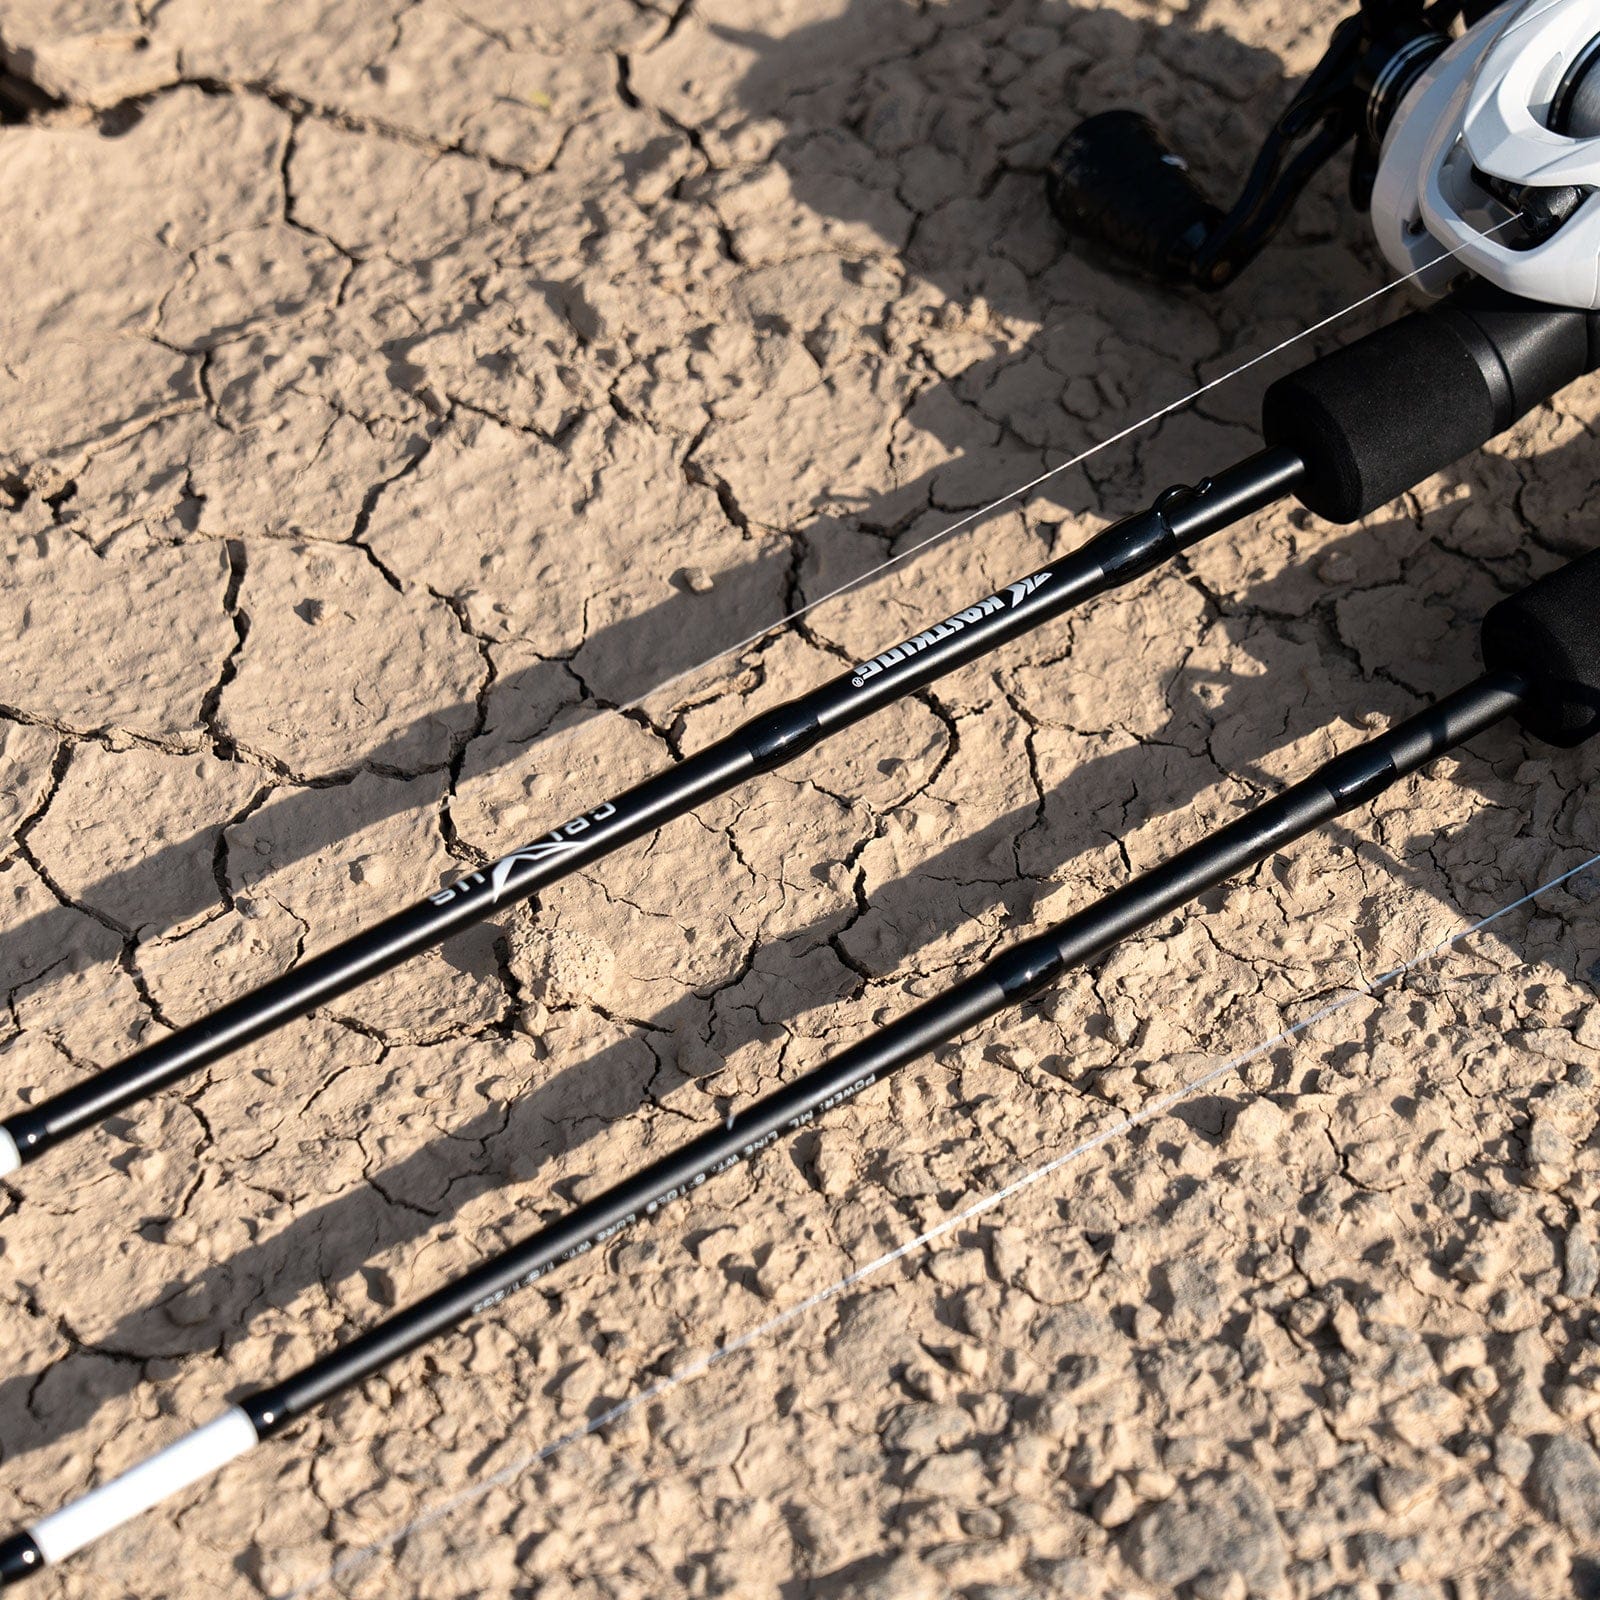 Buy KastKing Crixus Fishing Rods, Spinning Rod 5ft 6in-Light - M